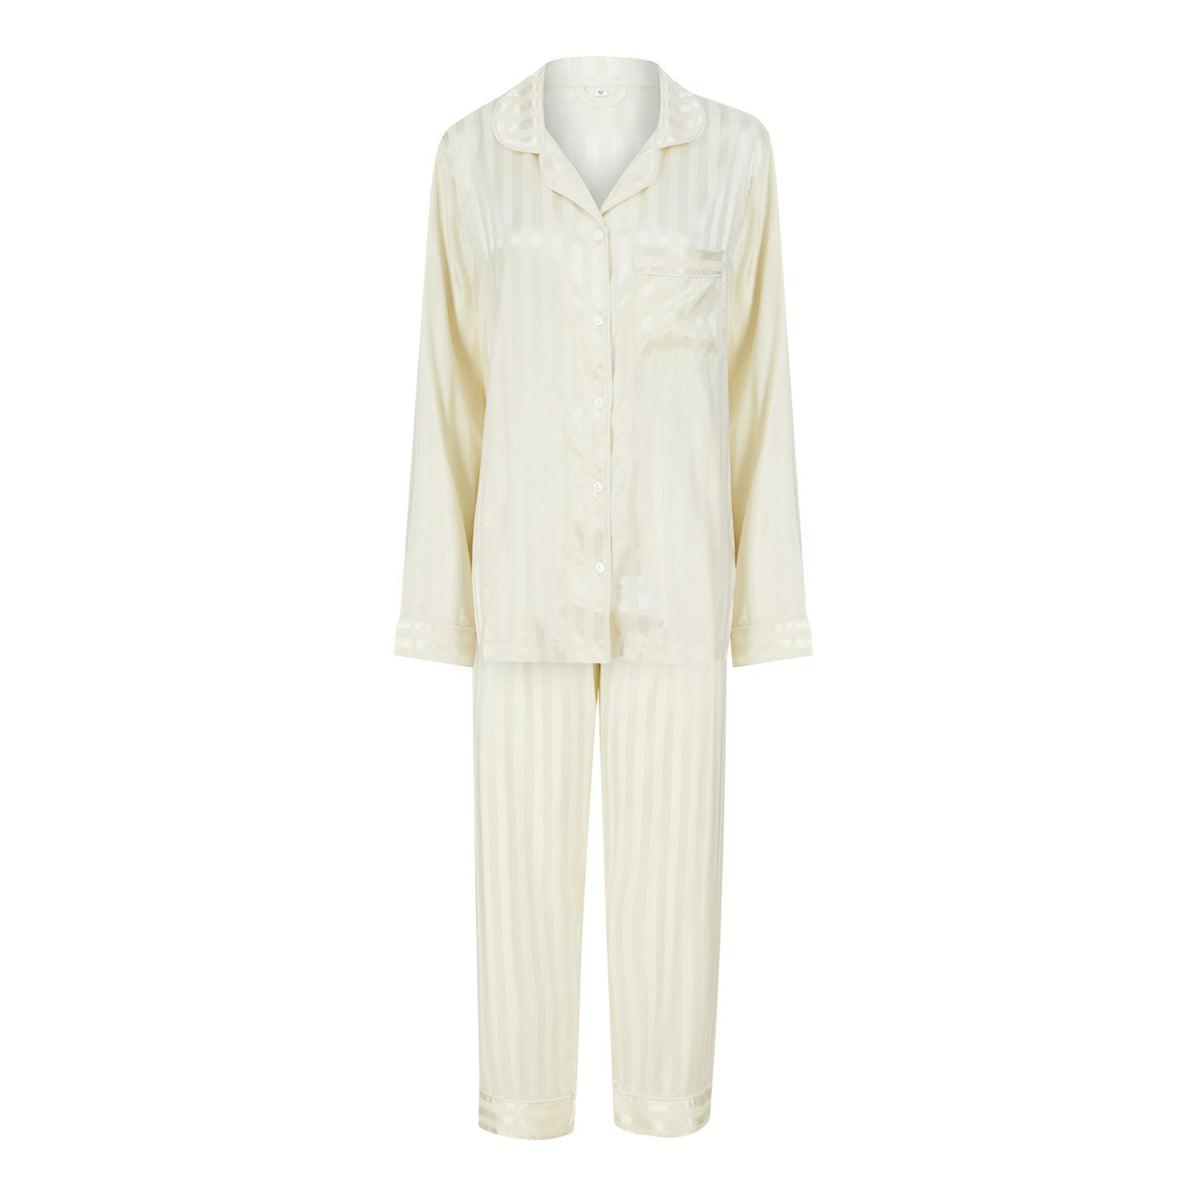 Satin stripe trouser pyjama set- Ivory - The NAP Co.